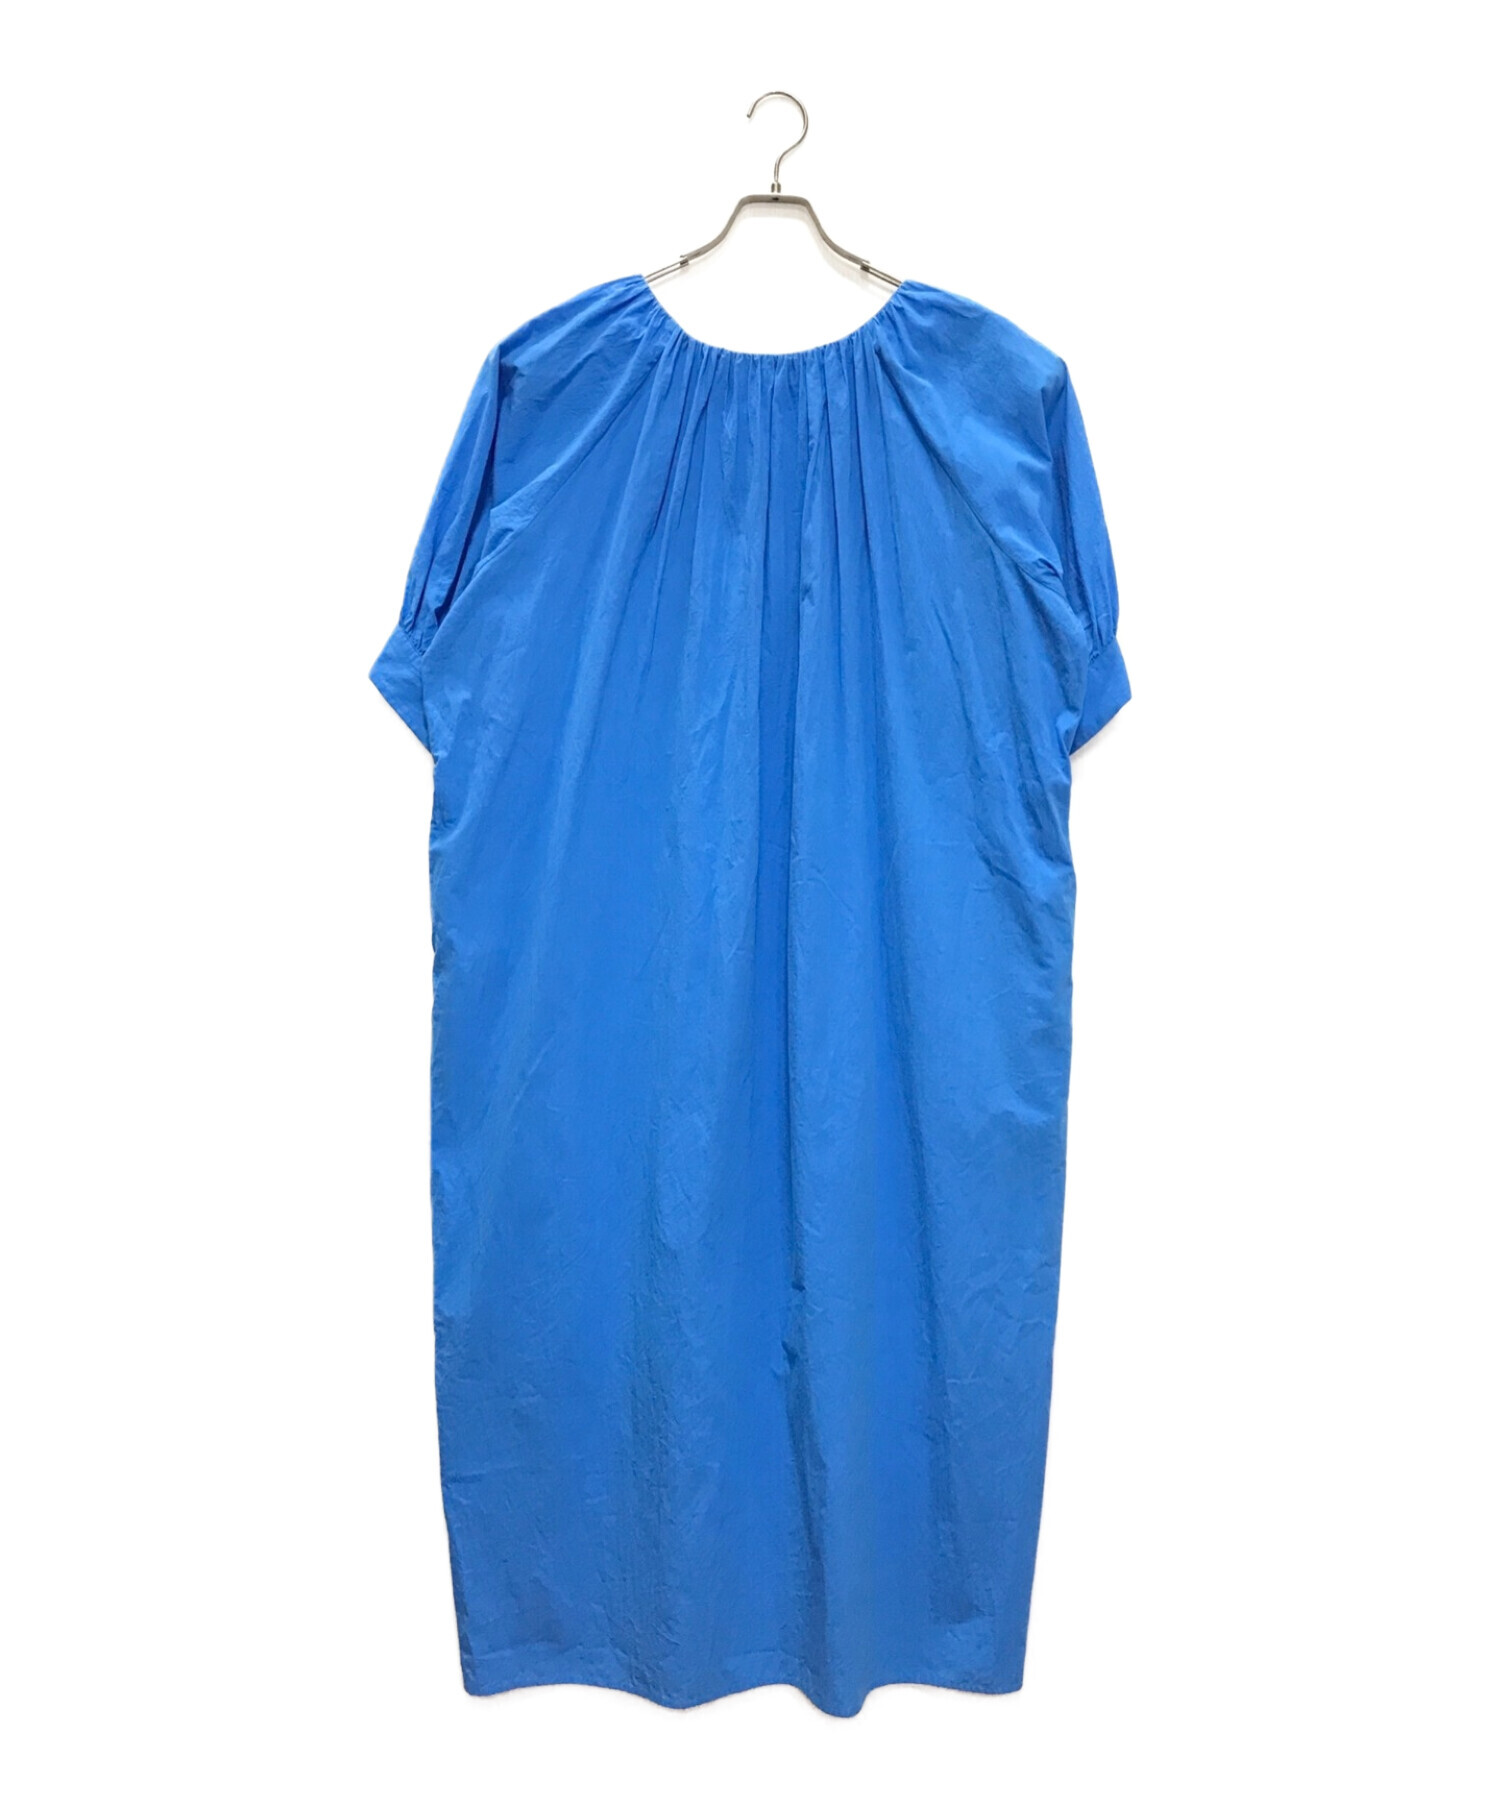 FRAMeWORK (フレームワーク) コットンギャザードレス ブルー サイズ:下記参照